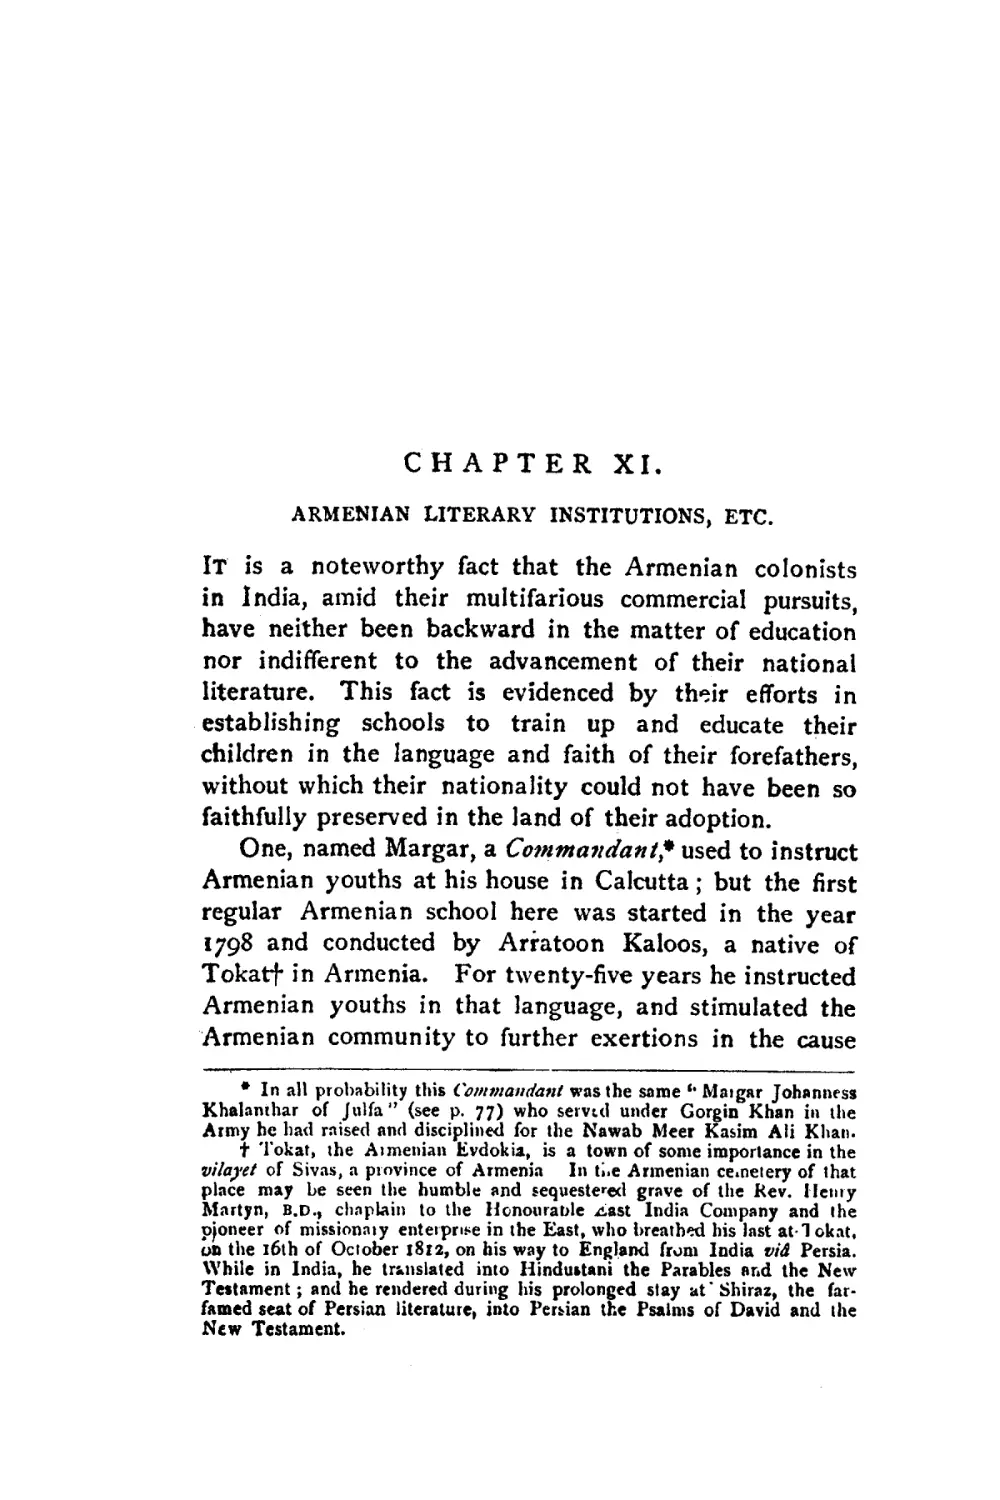 CHAPTER XI. ARMENIAN LITERARY INSTITUTIONS, ETC